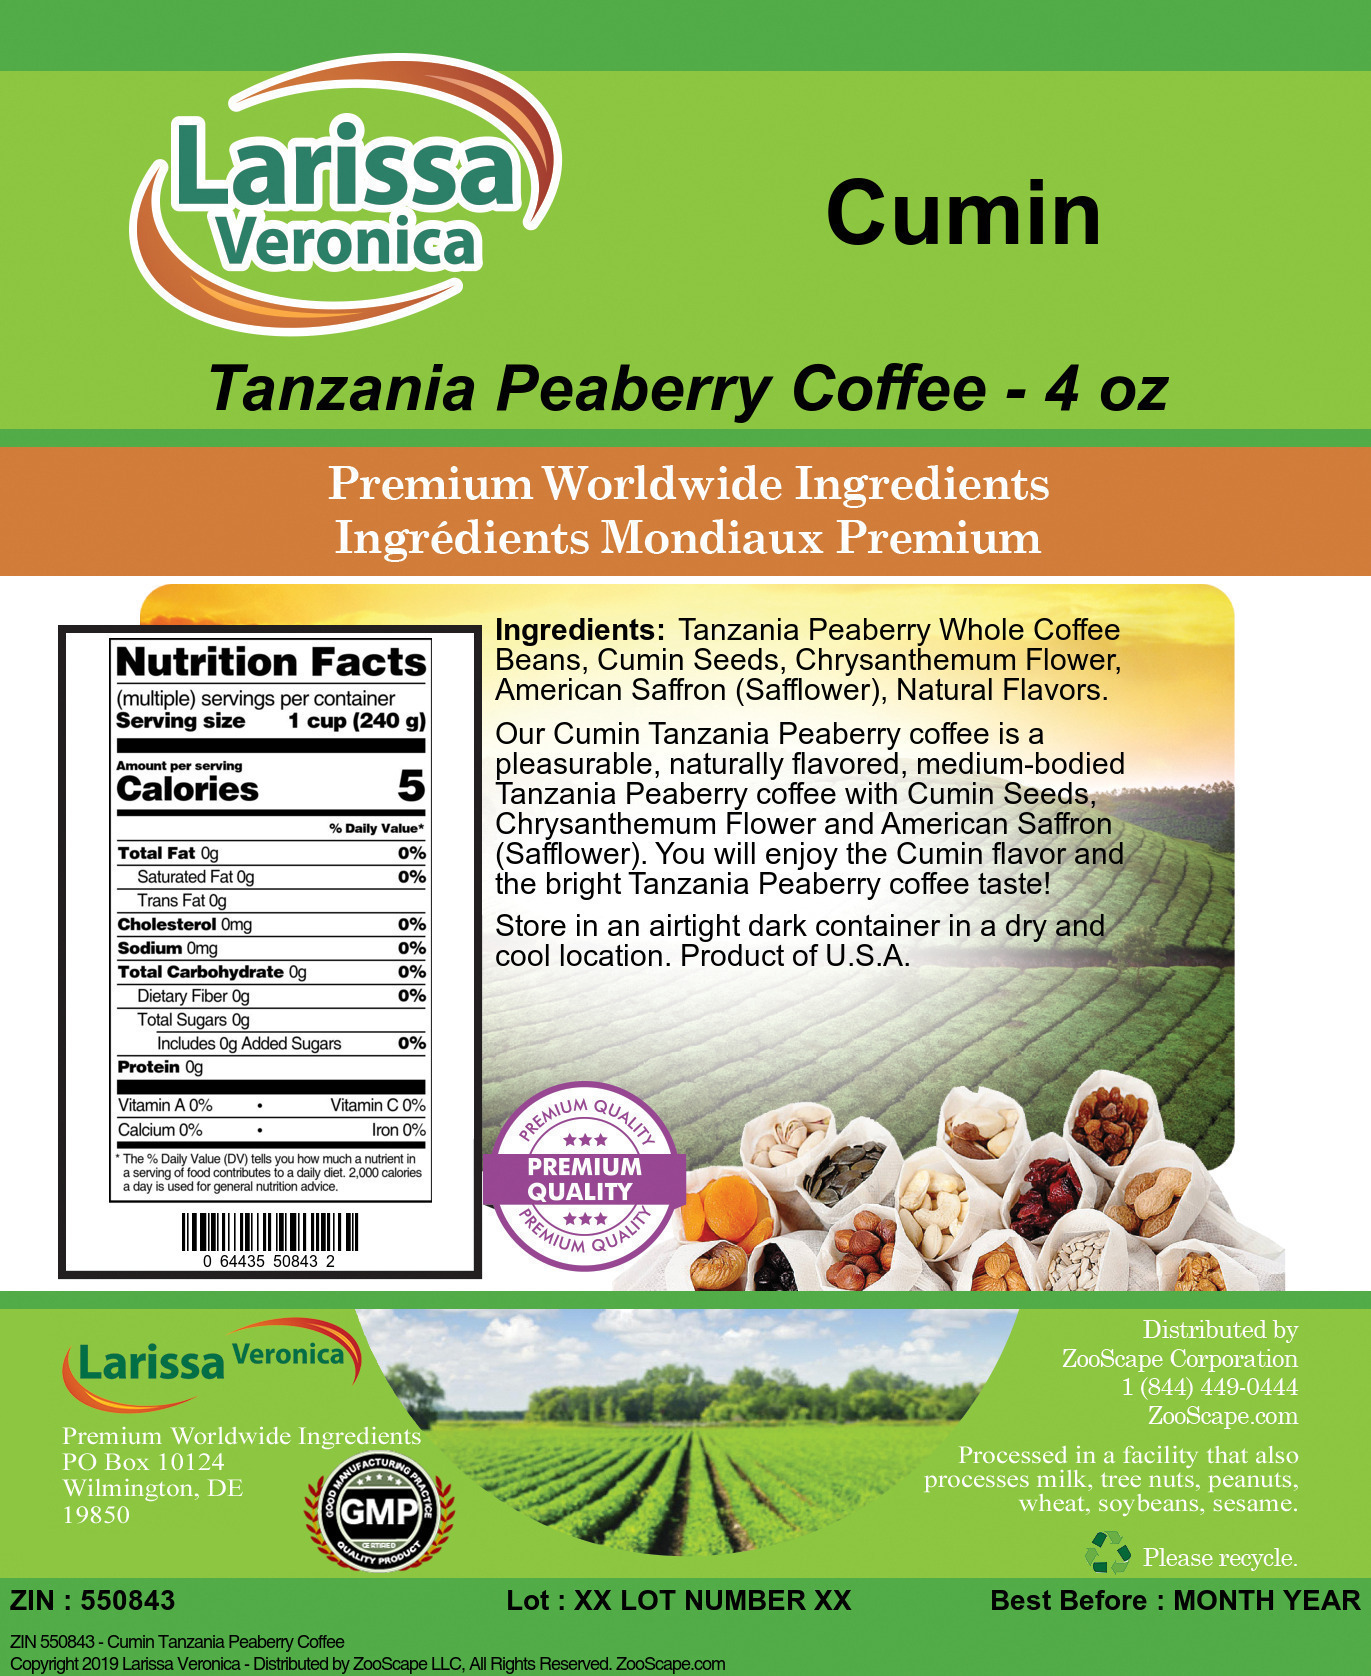 Cumin Tanzania Peaberry Coffee - Label